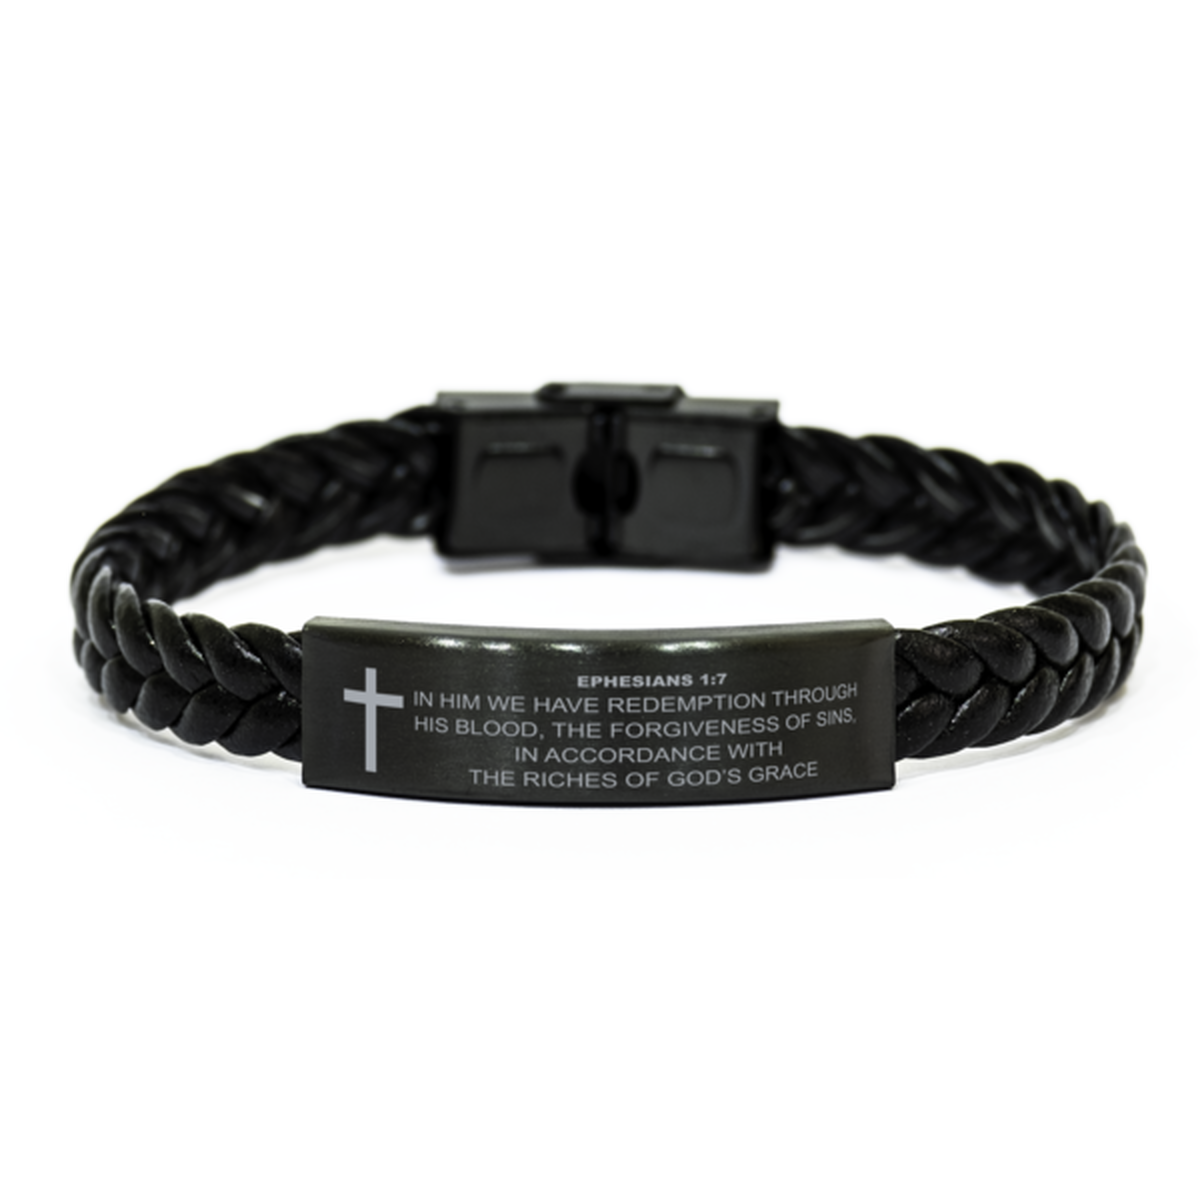 Ephesians 1:7 Bracelet, In Him We Have Redemption Through His Blood, Bible Verse Bracelet, Christian Bracelet, Braided Leather Bracelet, Easter Gift